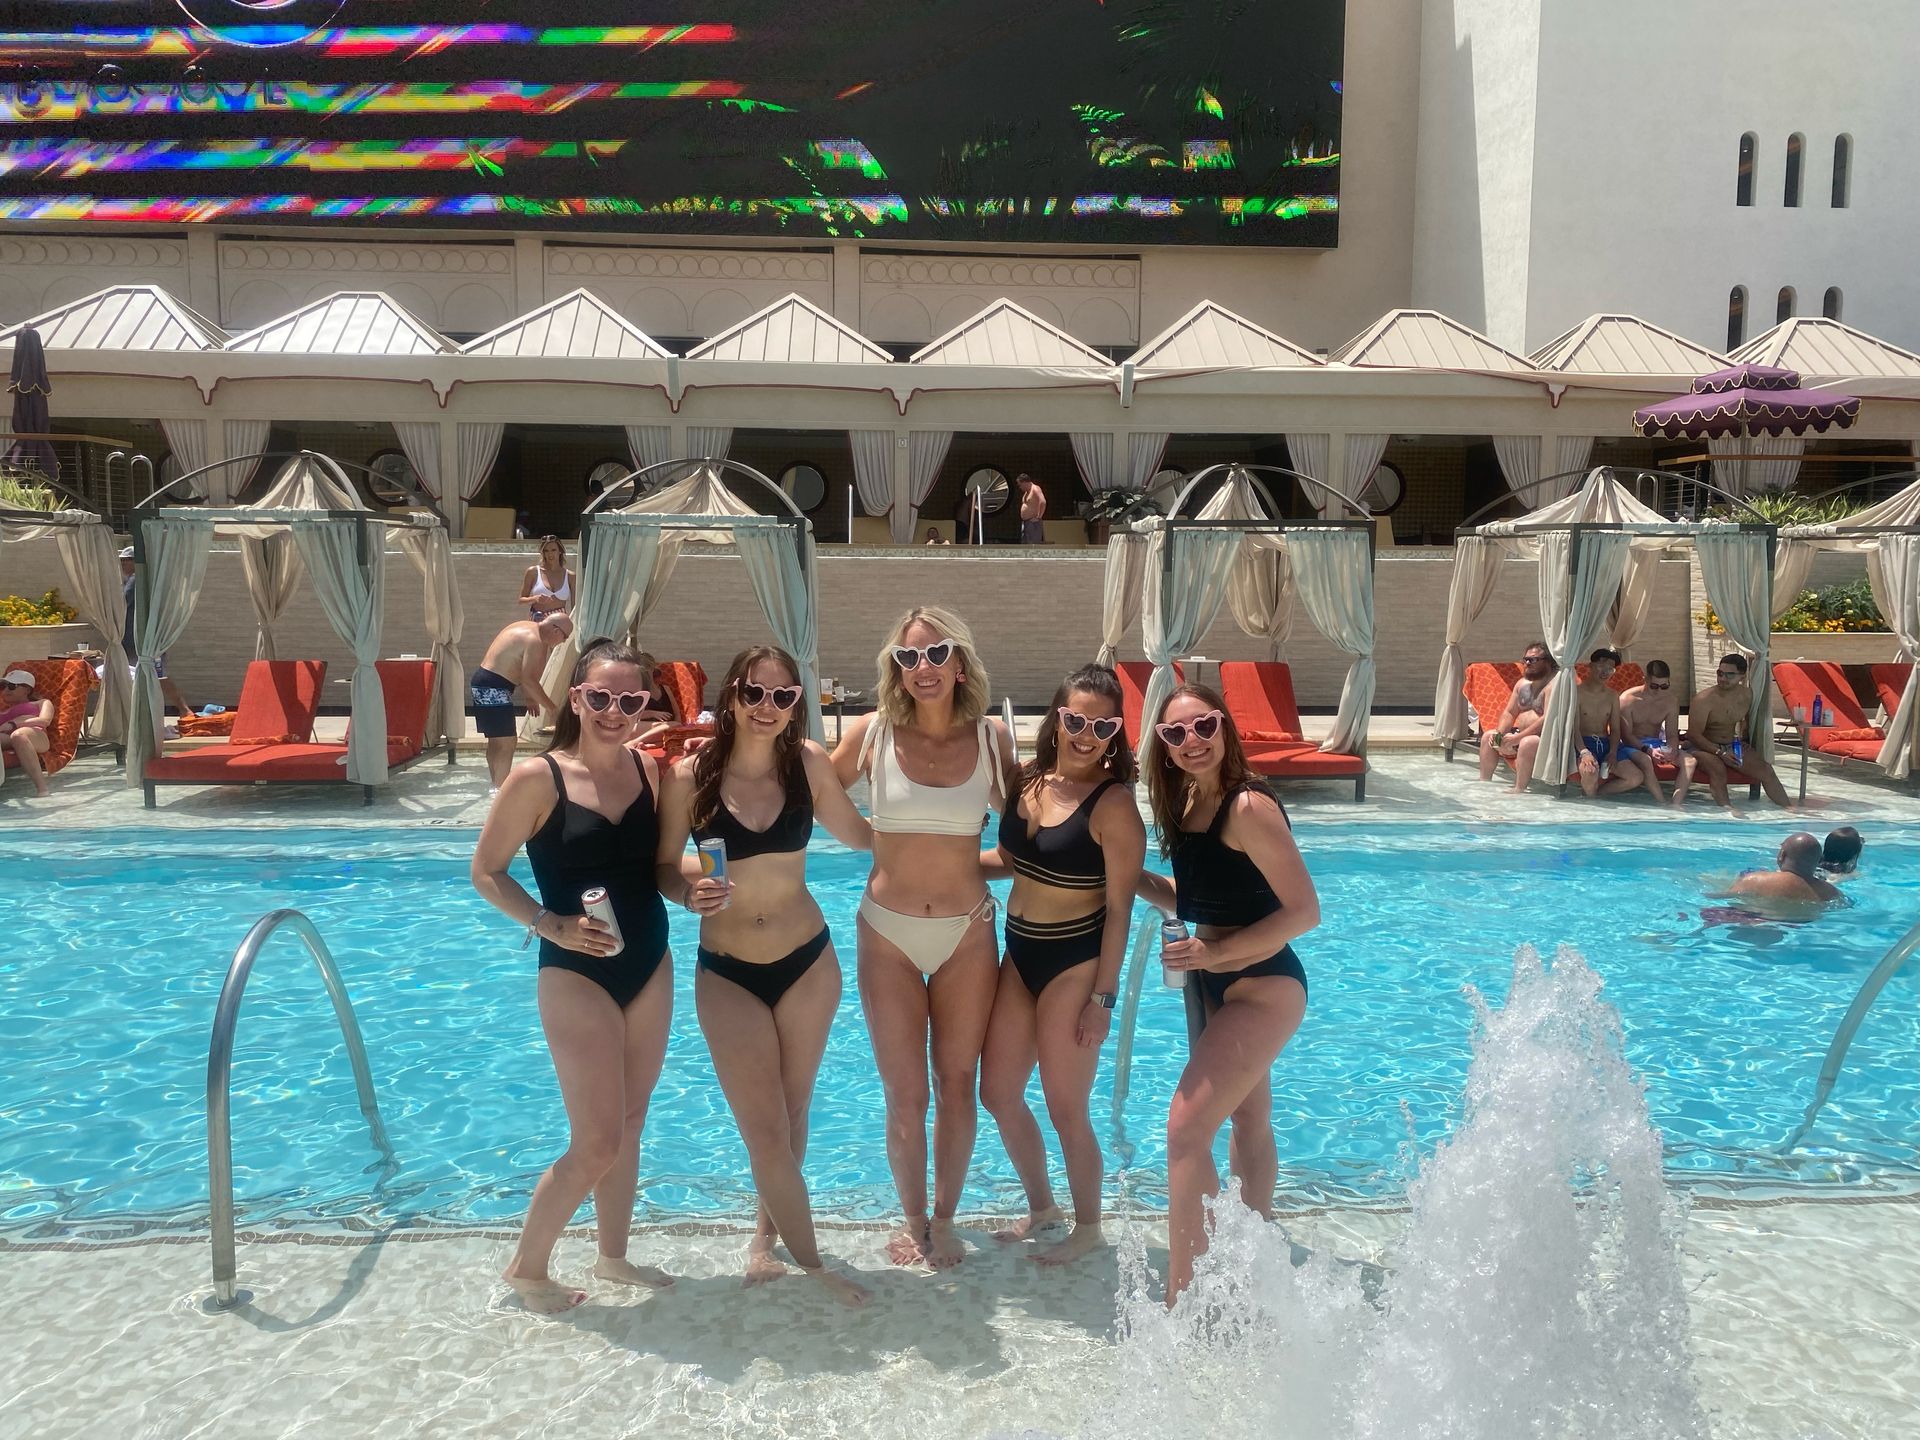 Las Vegas: Skip-the-Line Pool Party Tour